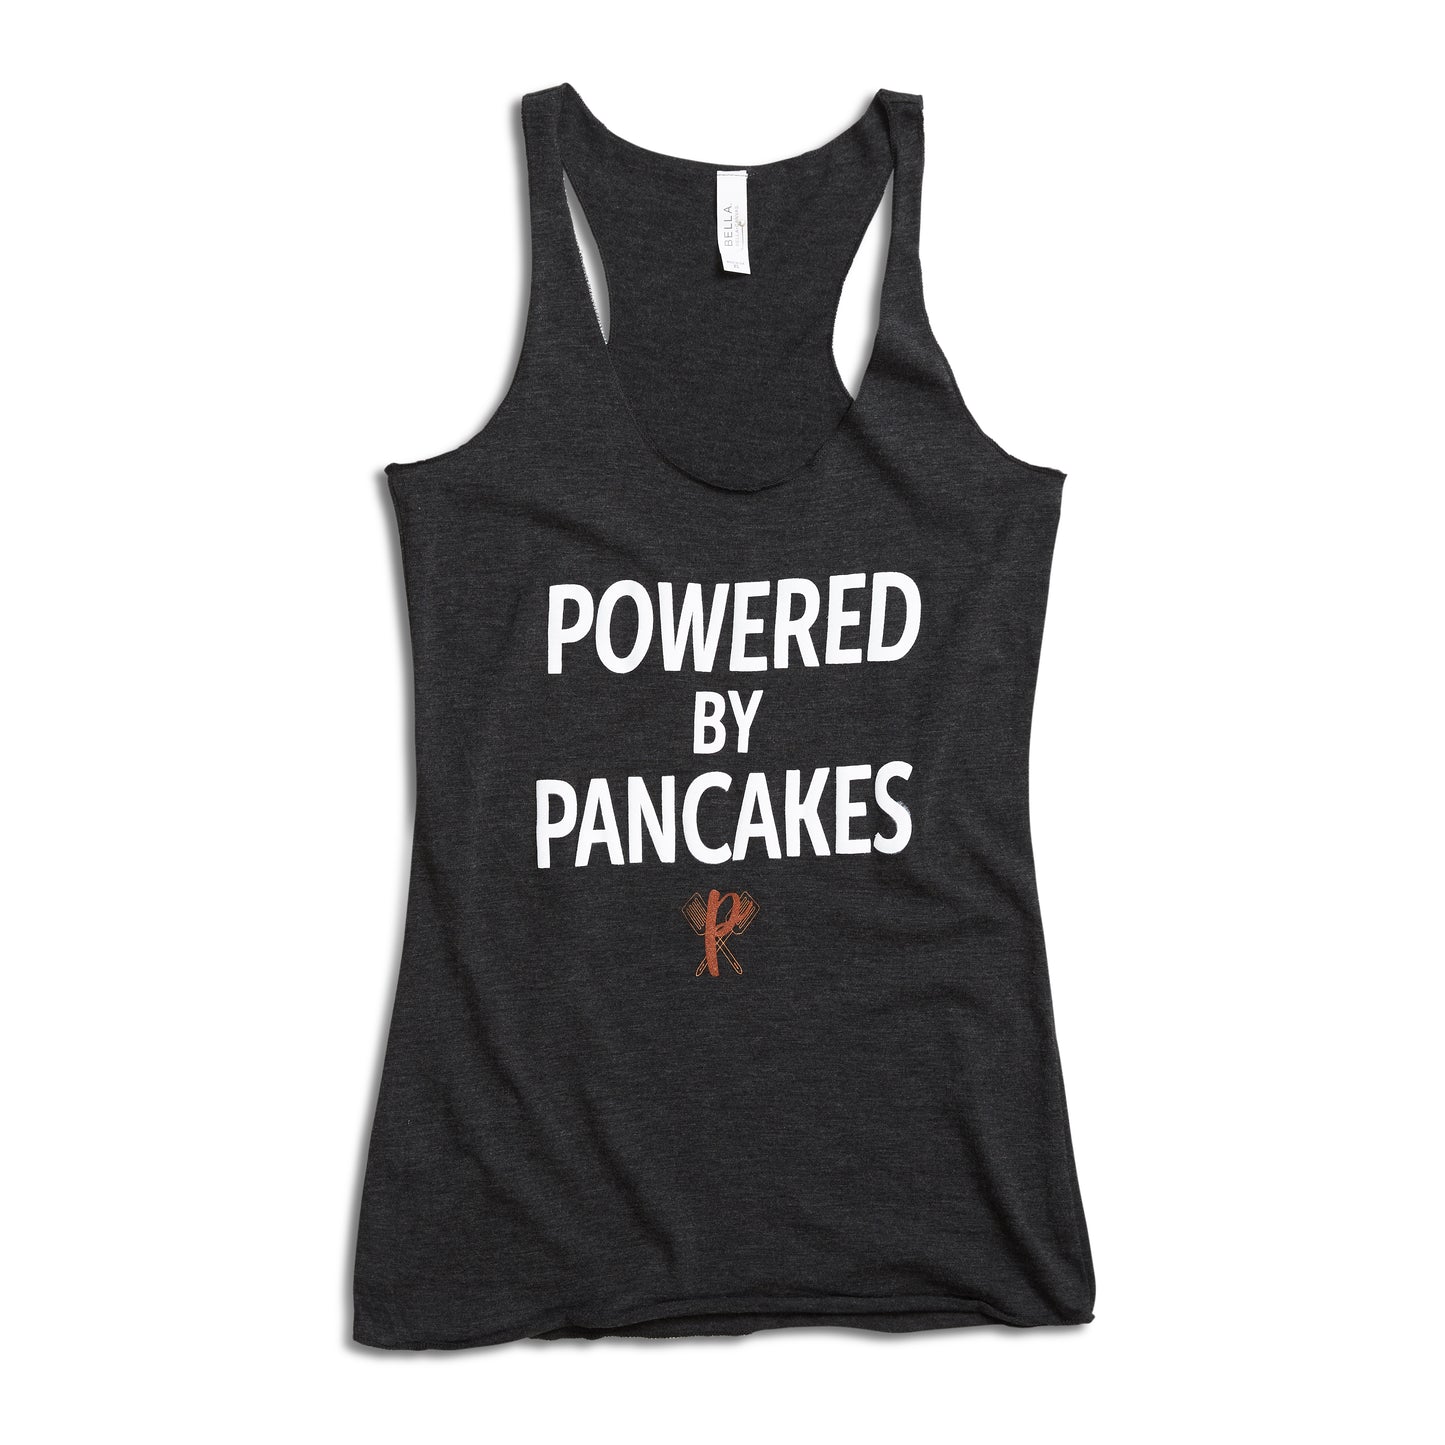 Women’s Full-length Powered by Pancakes Tank Top GREY